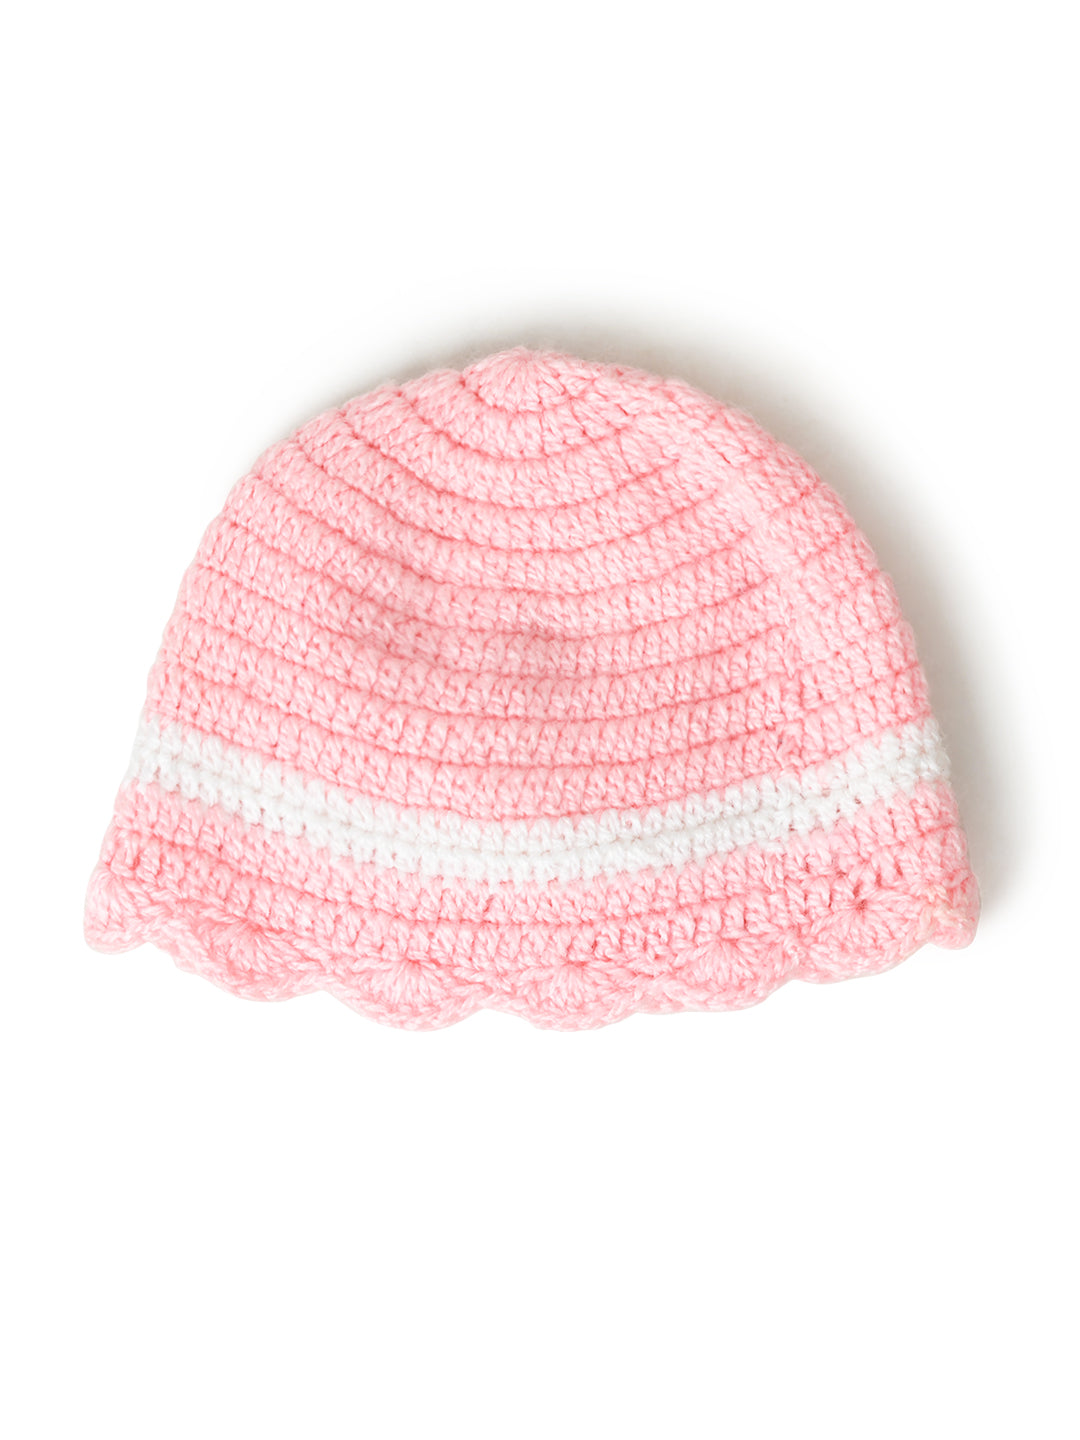 Pack of 2 White, Pink Handmade Soft Woolen Beanie Winter Warm Cap for Girls